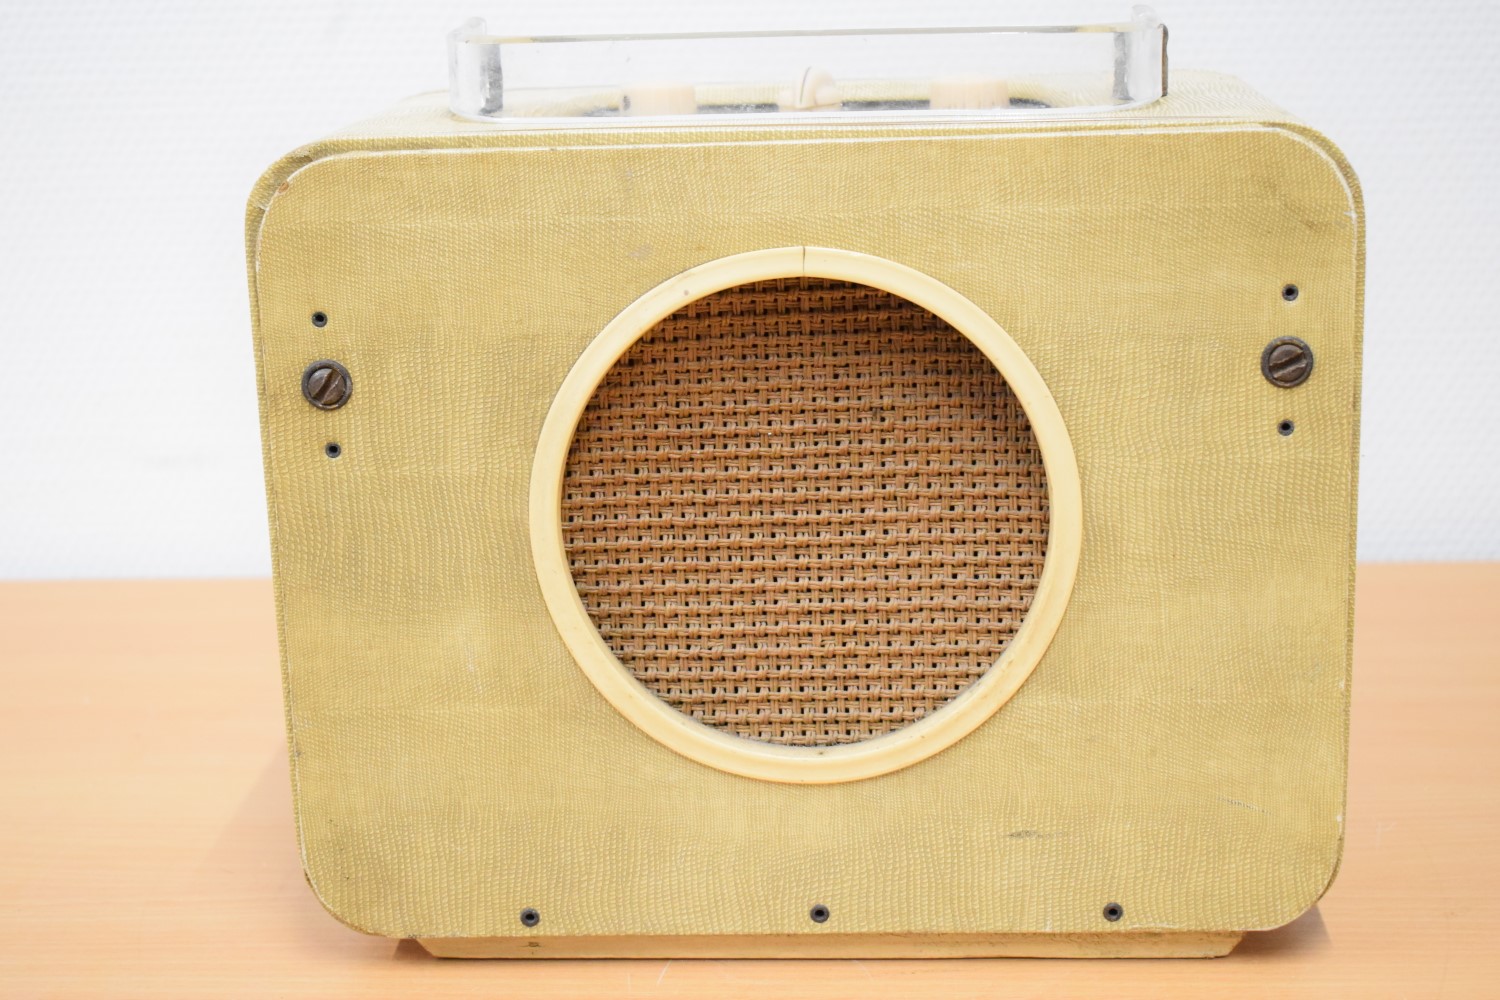 Ever Ready Sky Queen Portable Transistor Radio 